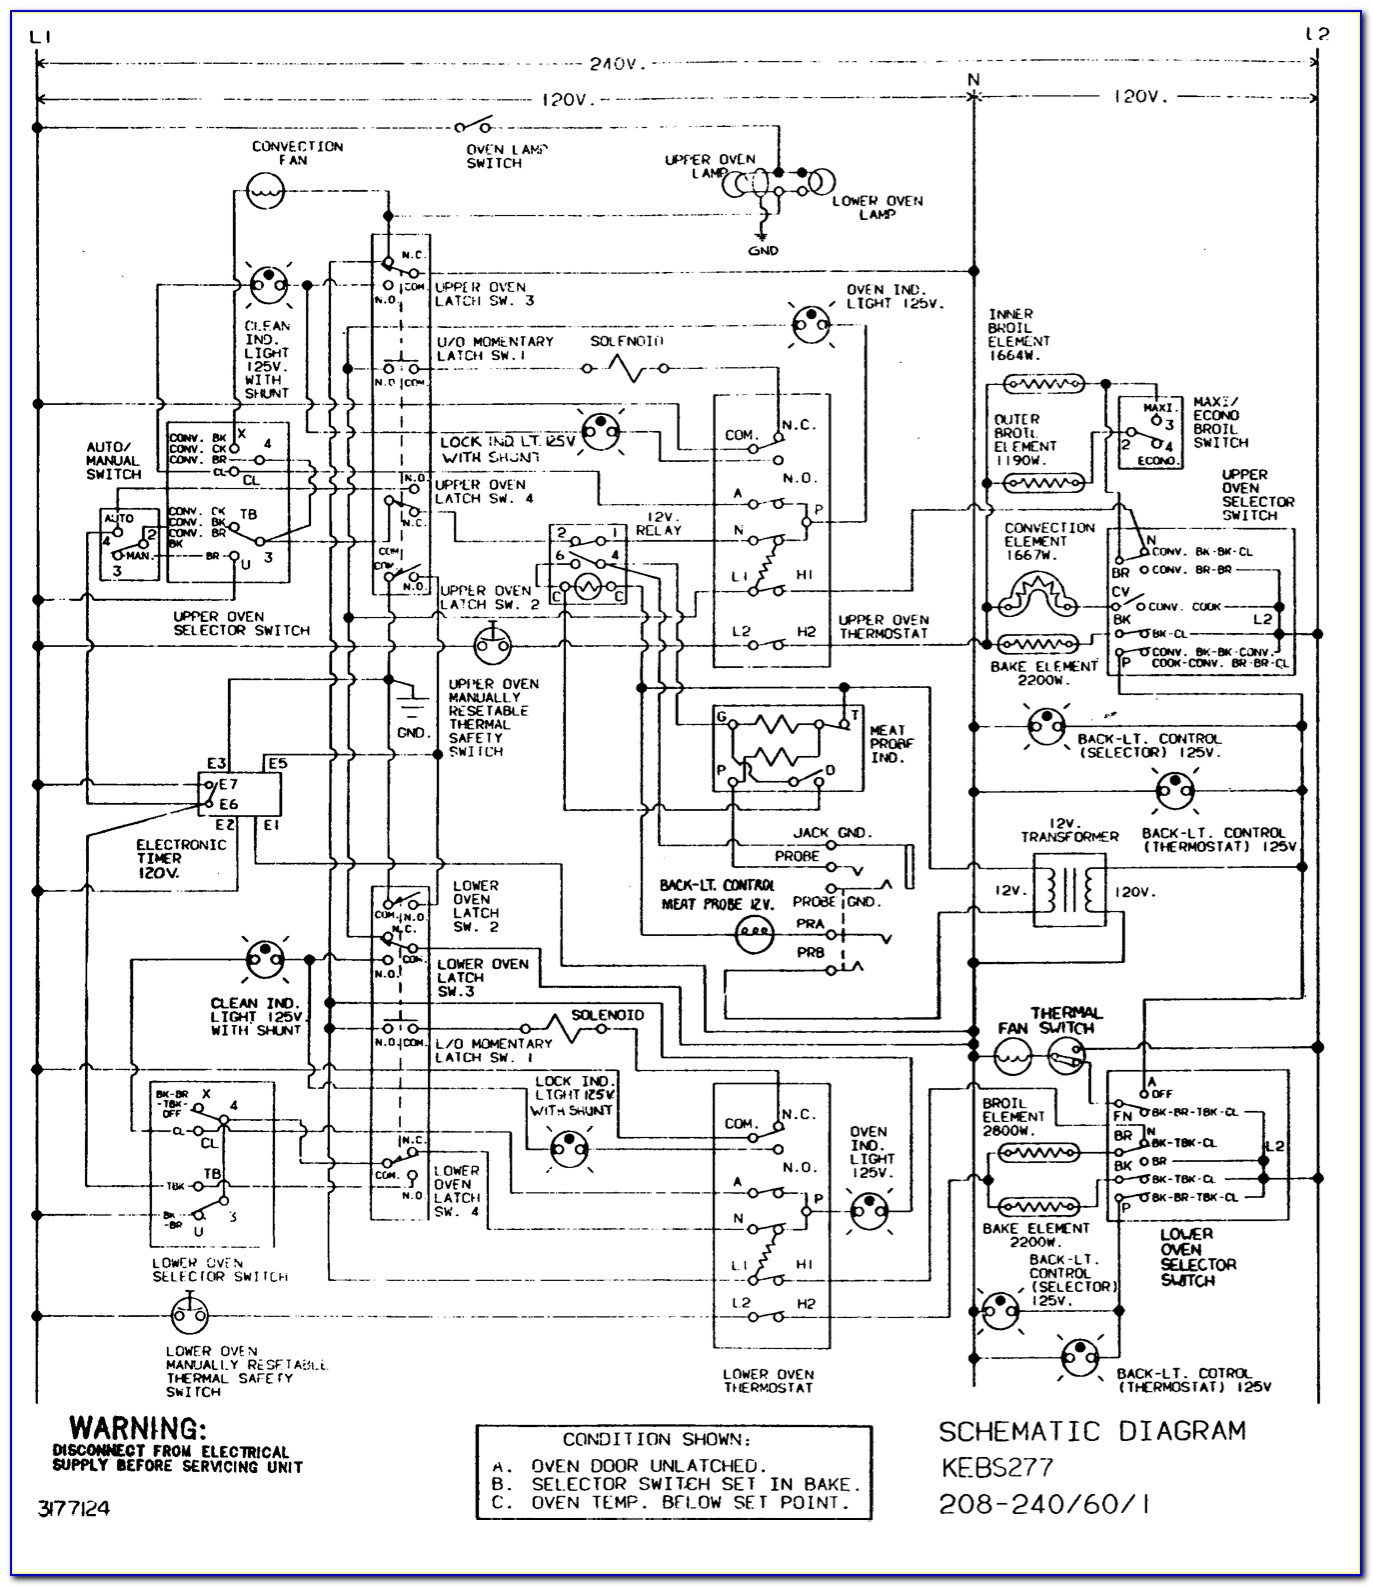 Kitchenaid Superba Dishwasher Wiring Diagram